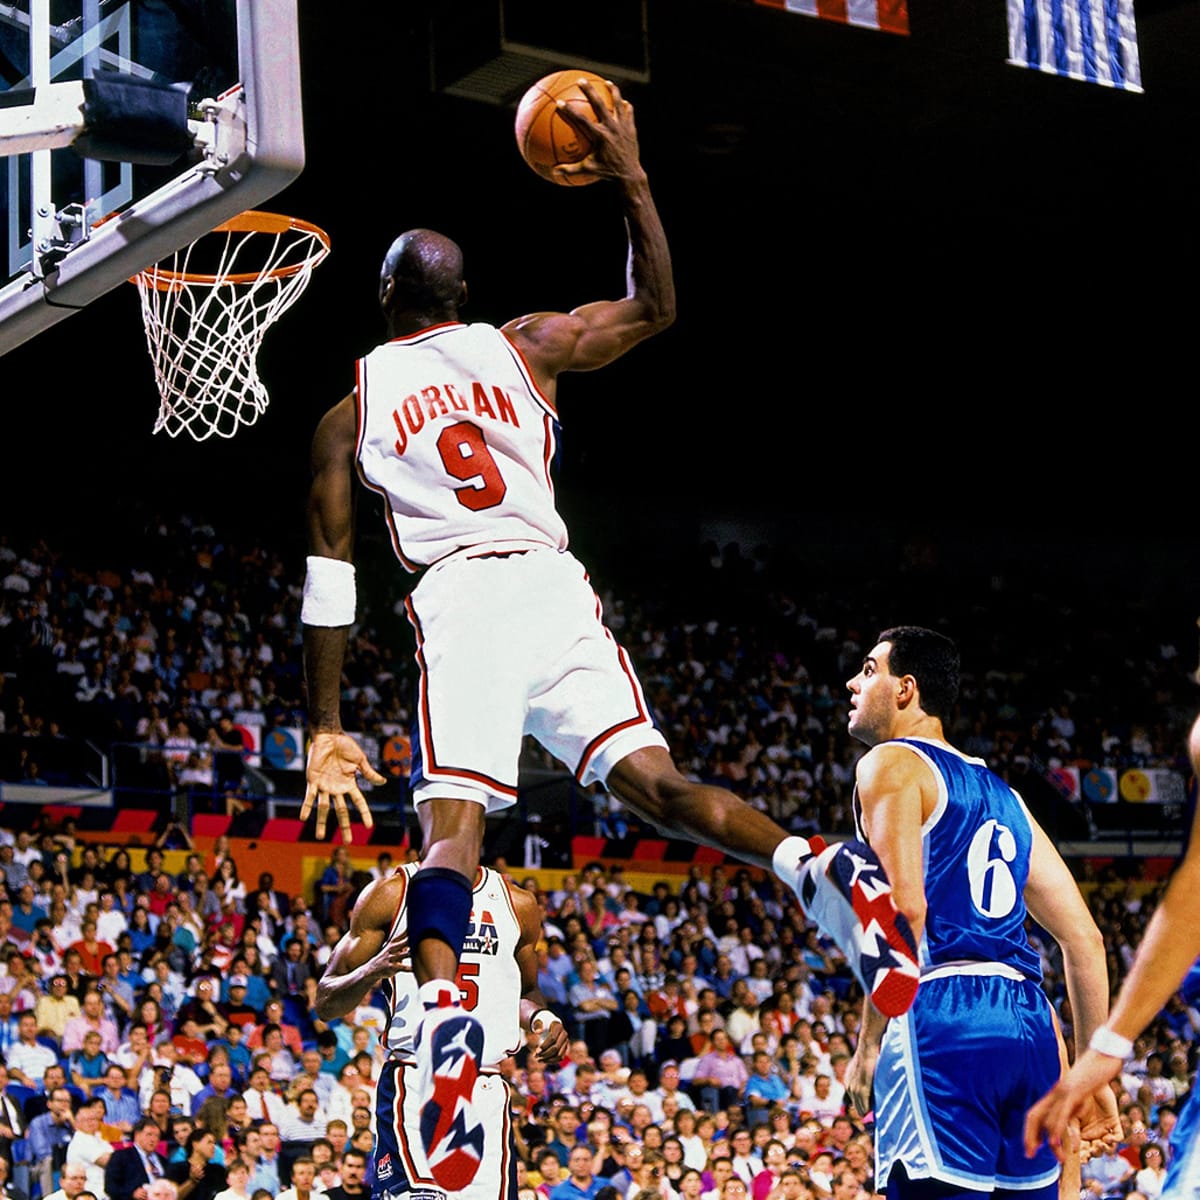 Top Moments: Routine pass ushers John Stockton into NBA's history